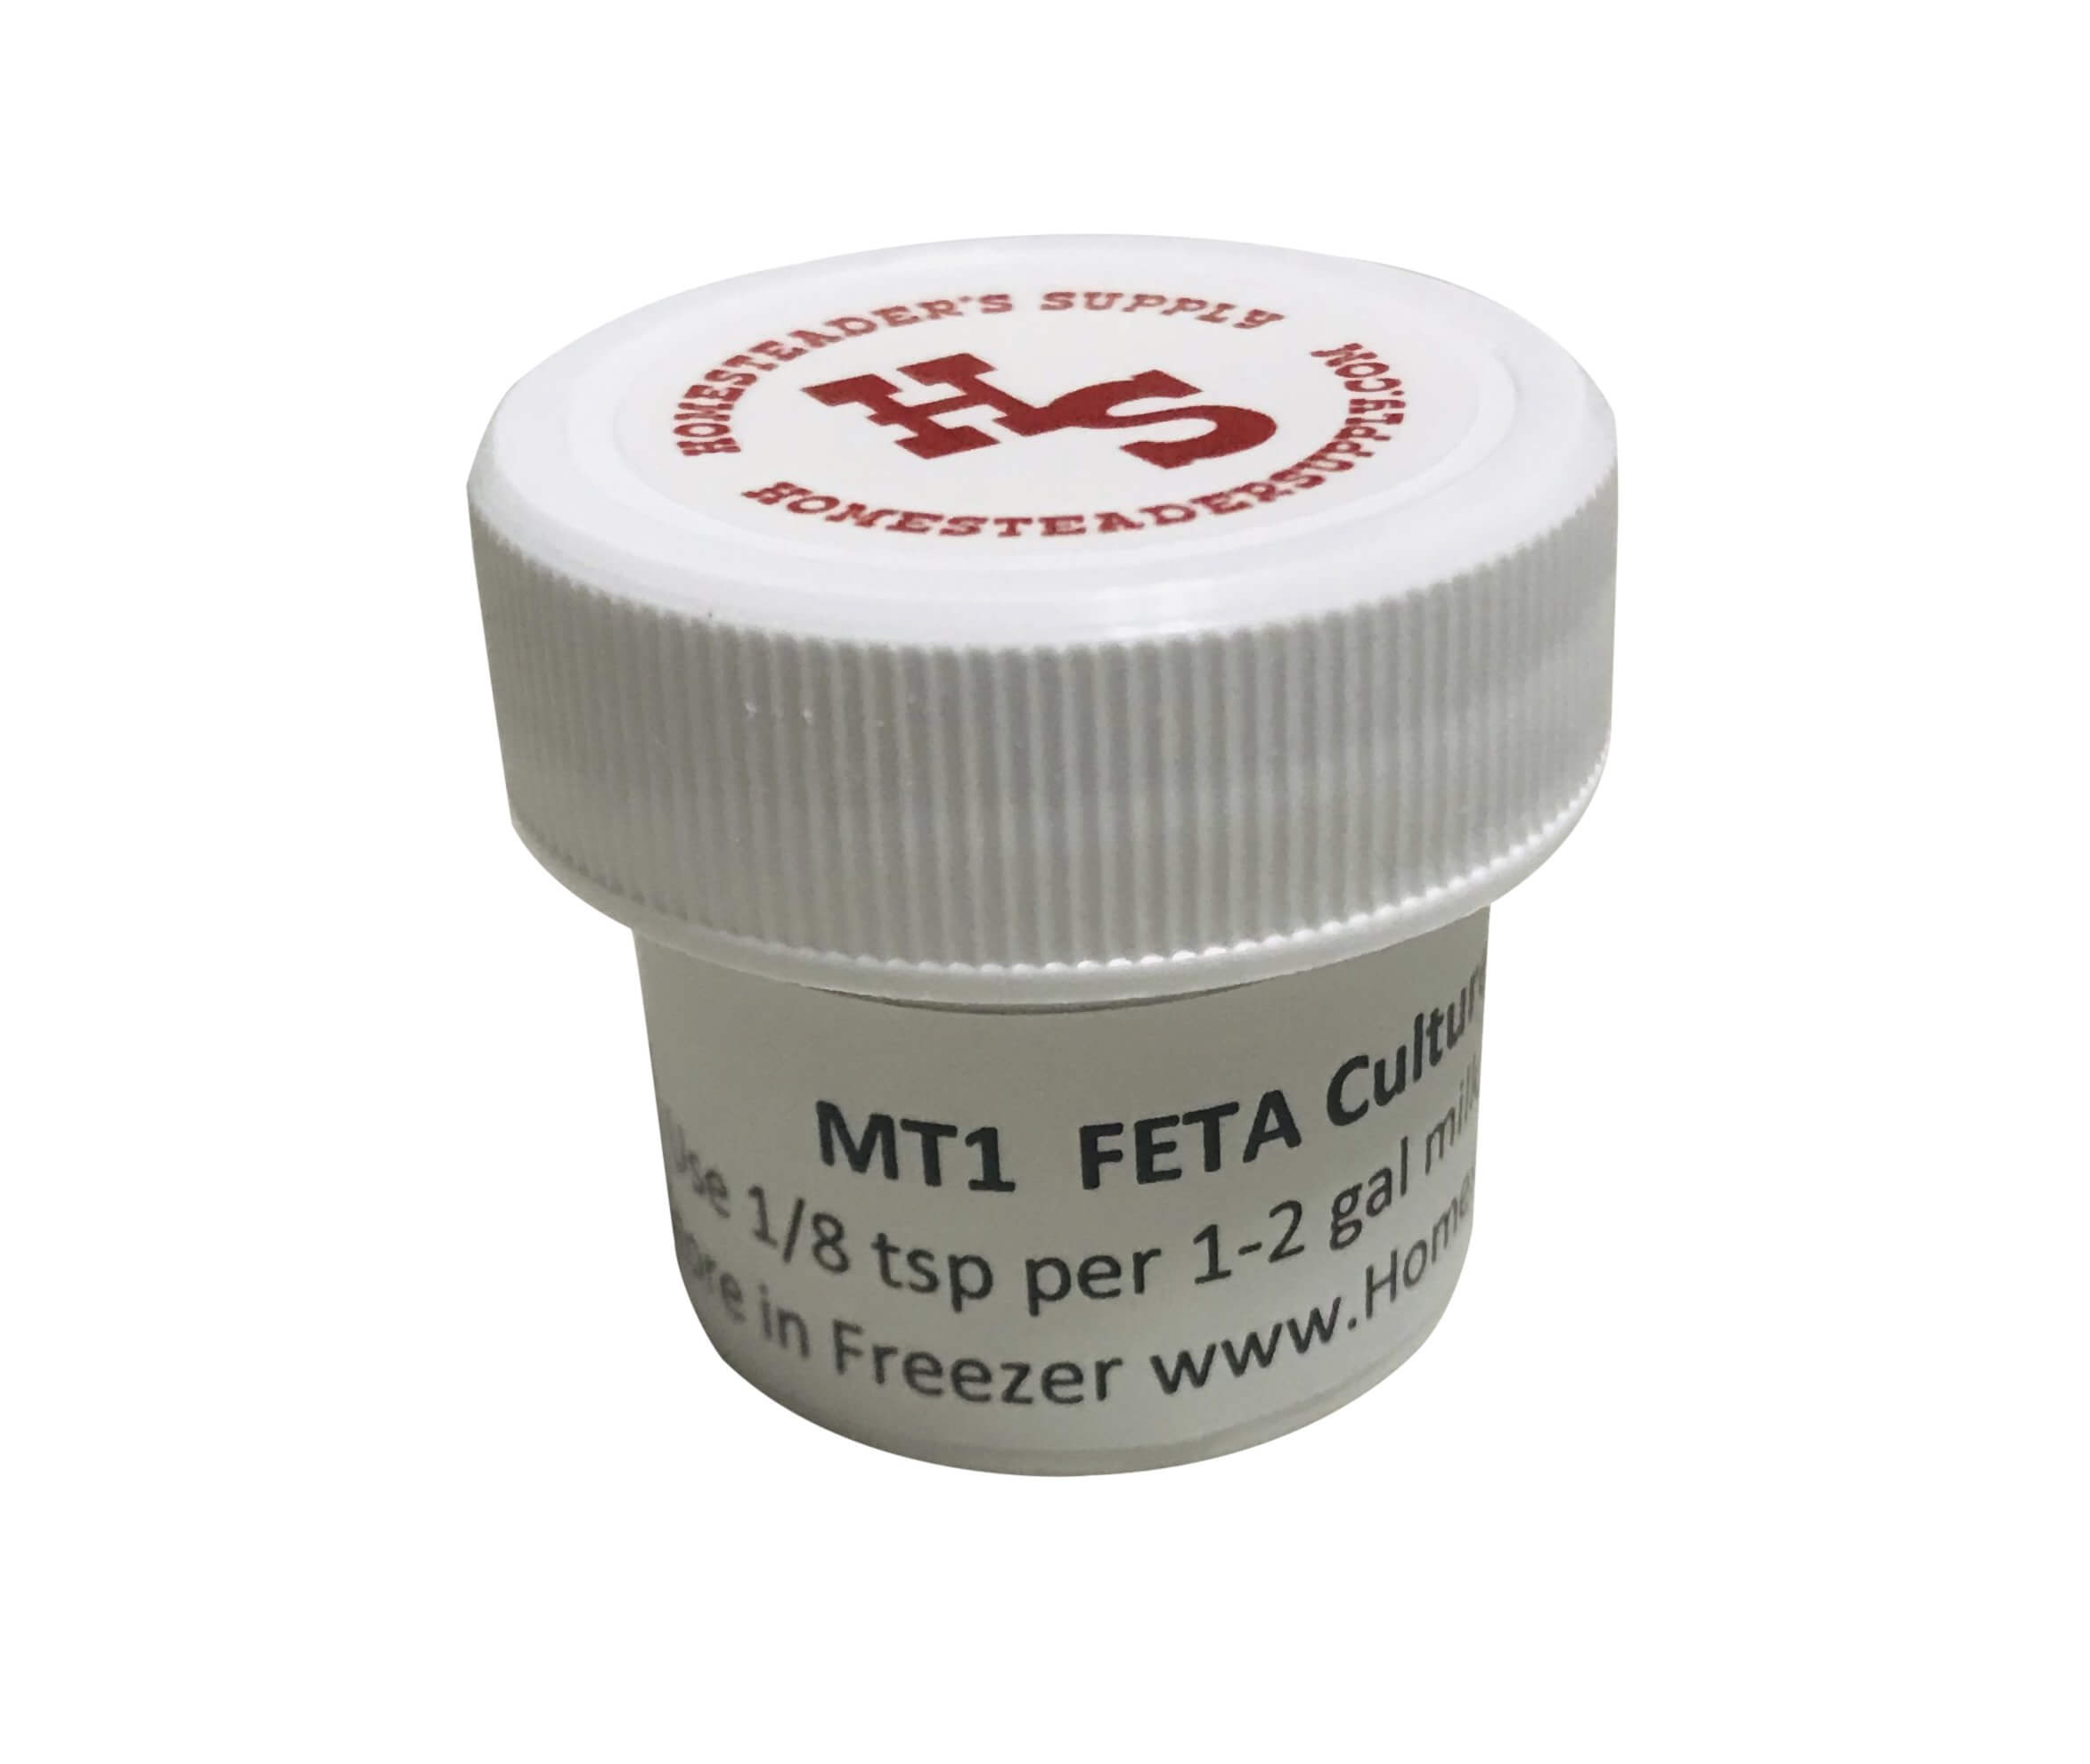 Feta MT1 Cheese Culture